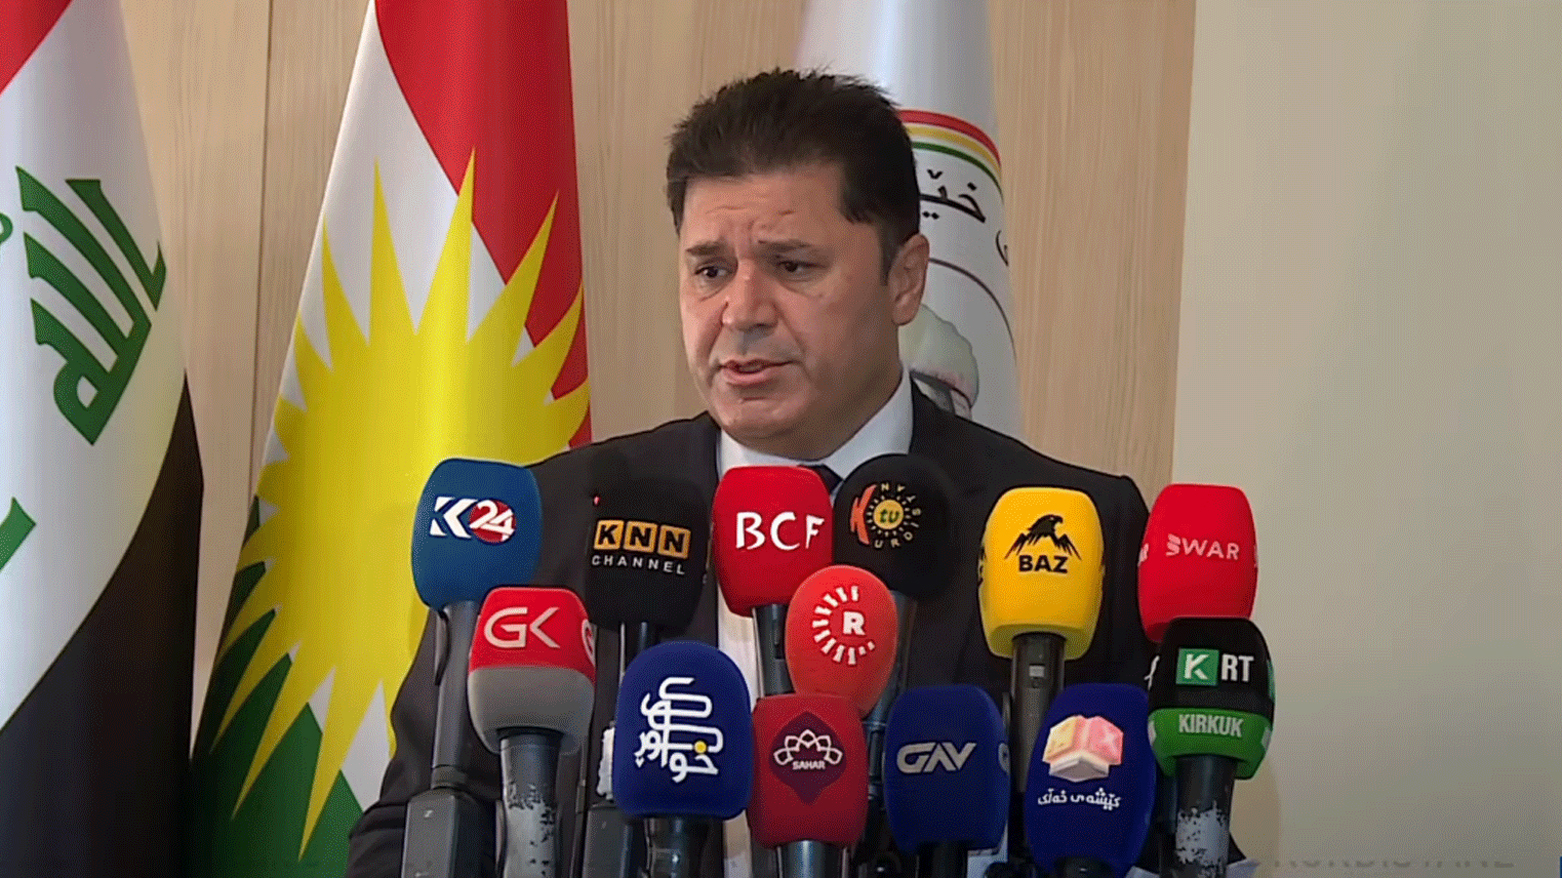 Over 3,300 arrested on drug-related charges in Kurdistan: KRG officer